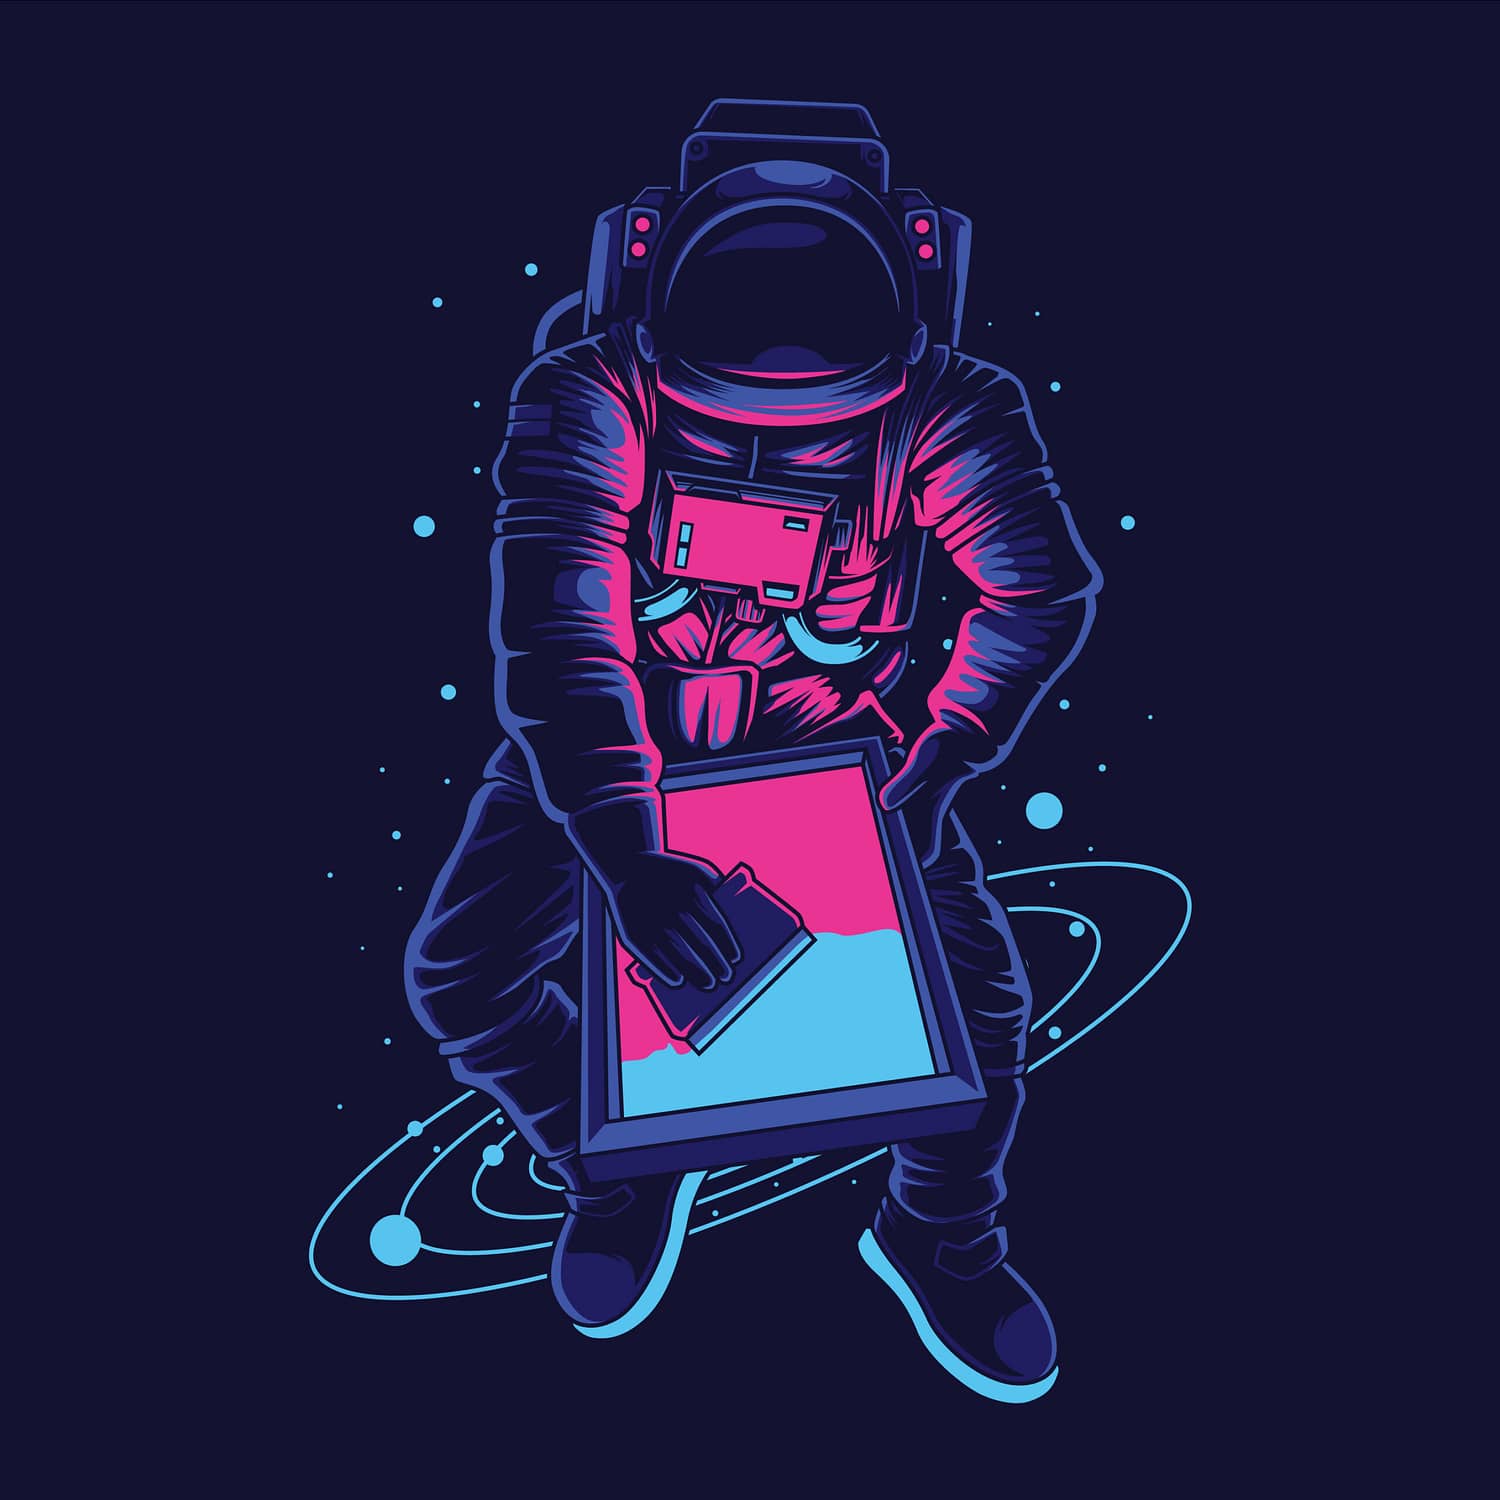 Screen printing in space